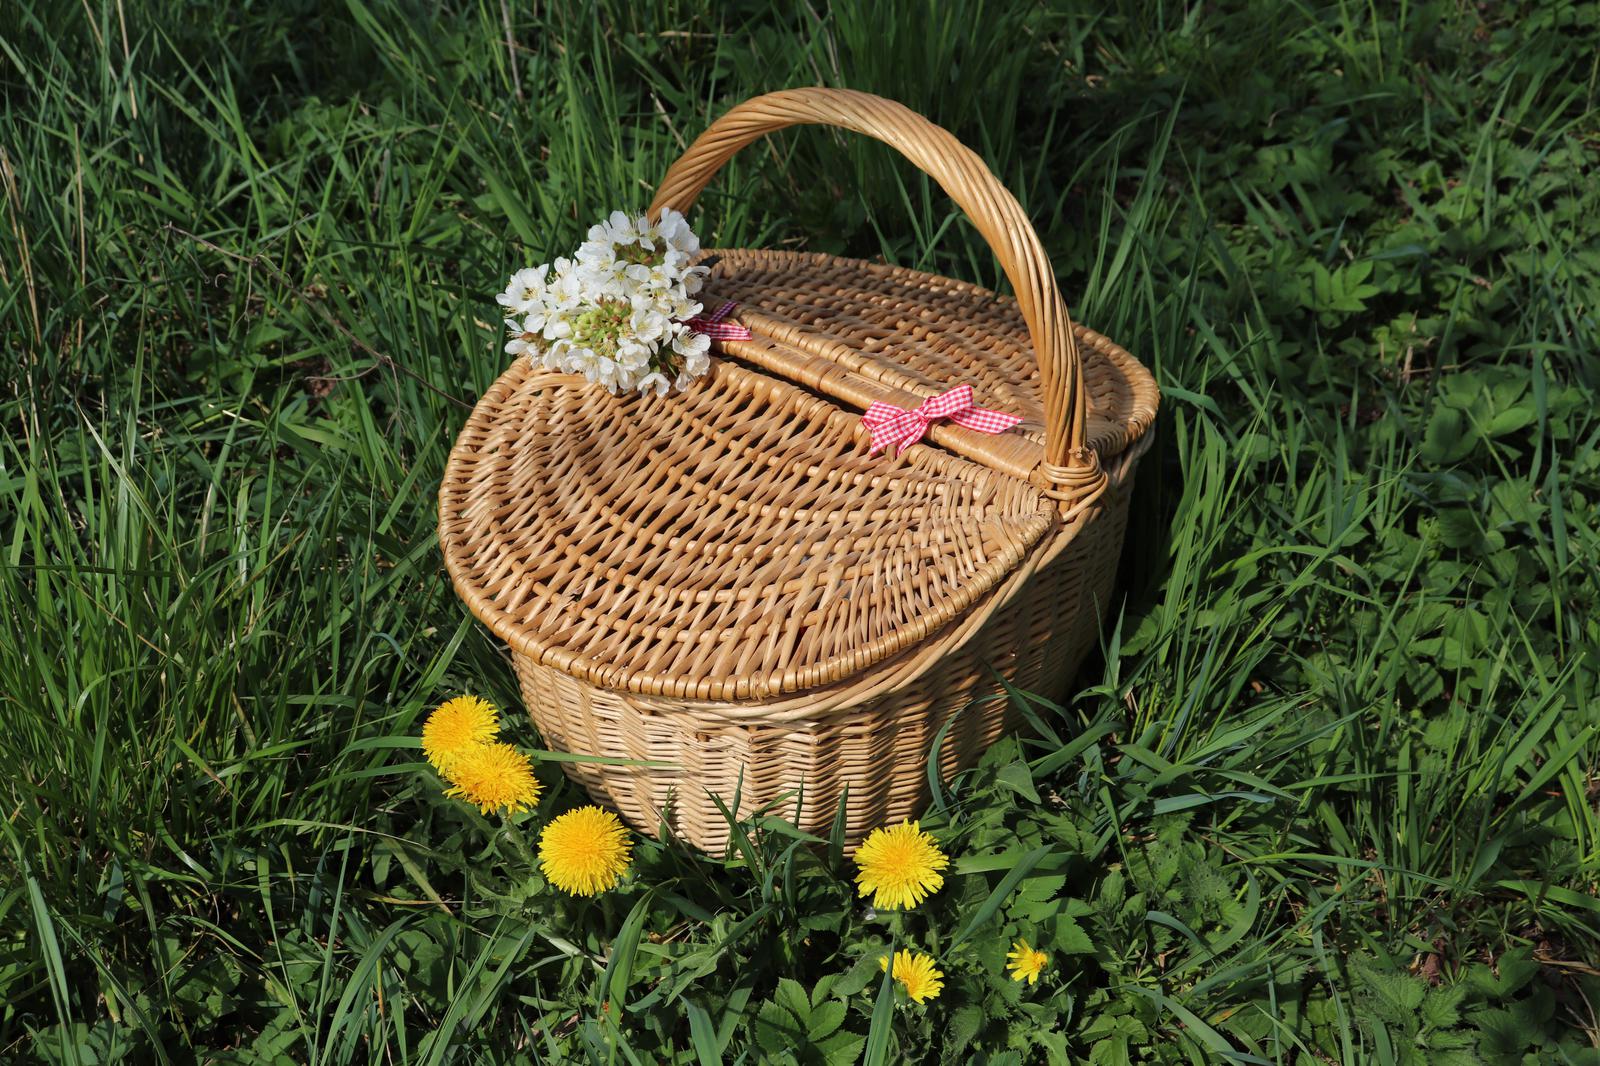 Kirschblütenpicknick|Kirschblüte|Kirschblüte feiern|Picknick|Picknickliebe|den Frühling feiern|Frühling|Kirschanbaugebiet|Franken|Fränkische Schweiz|Rituale|Frühlingsritual